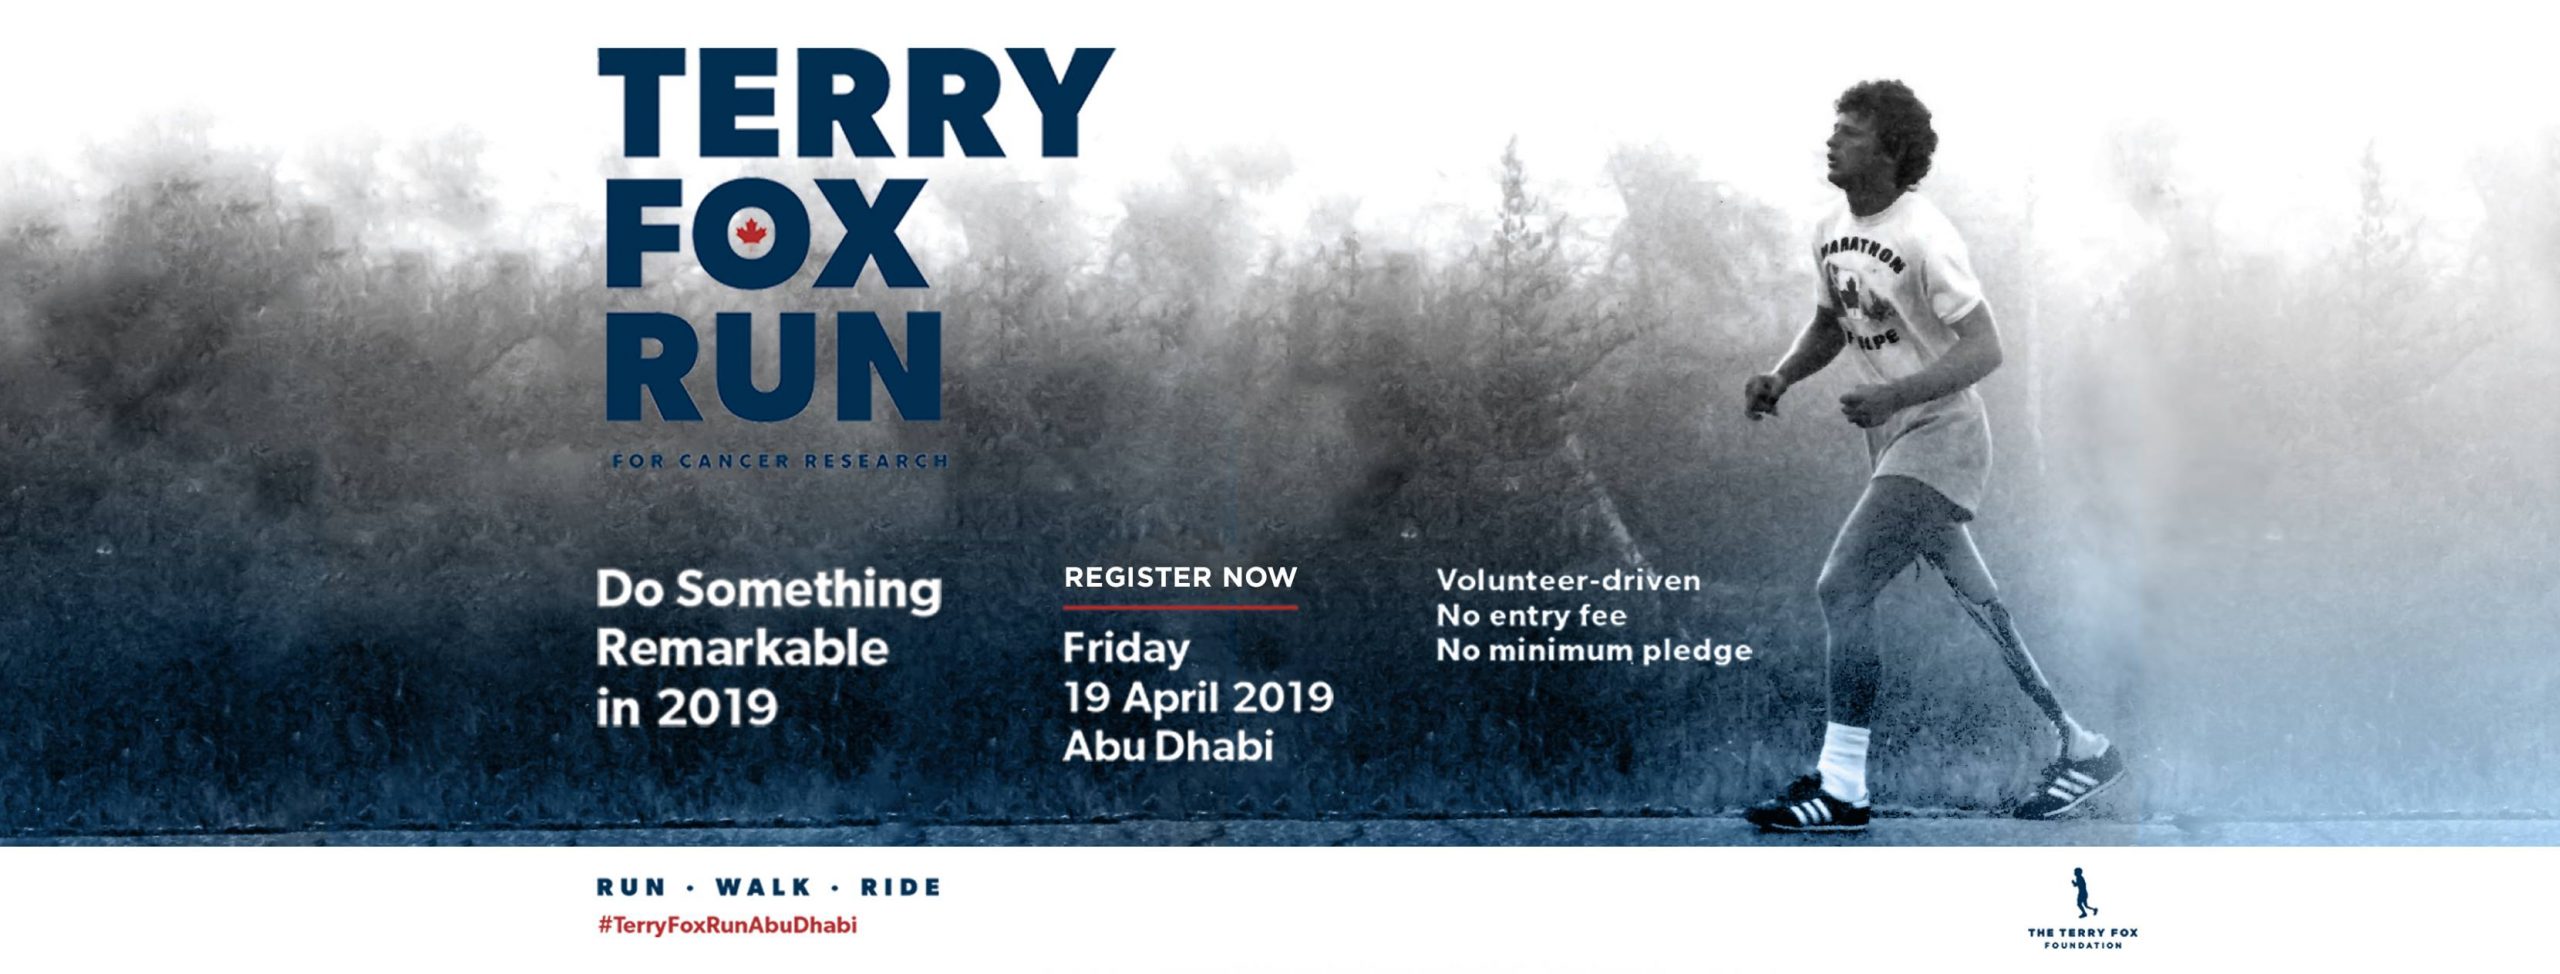 Terry Fox Run 2019 - Coming Soon in UAE